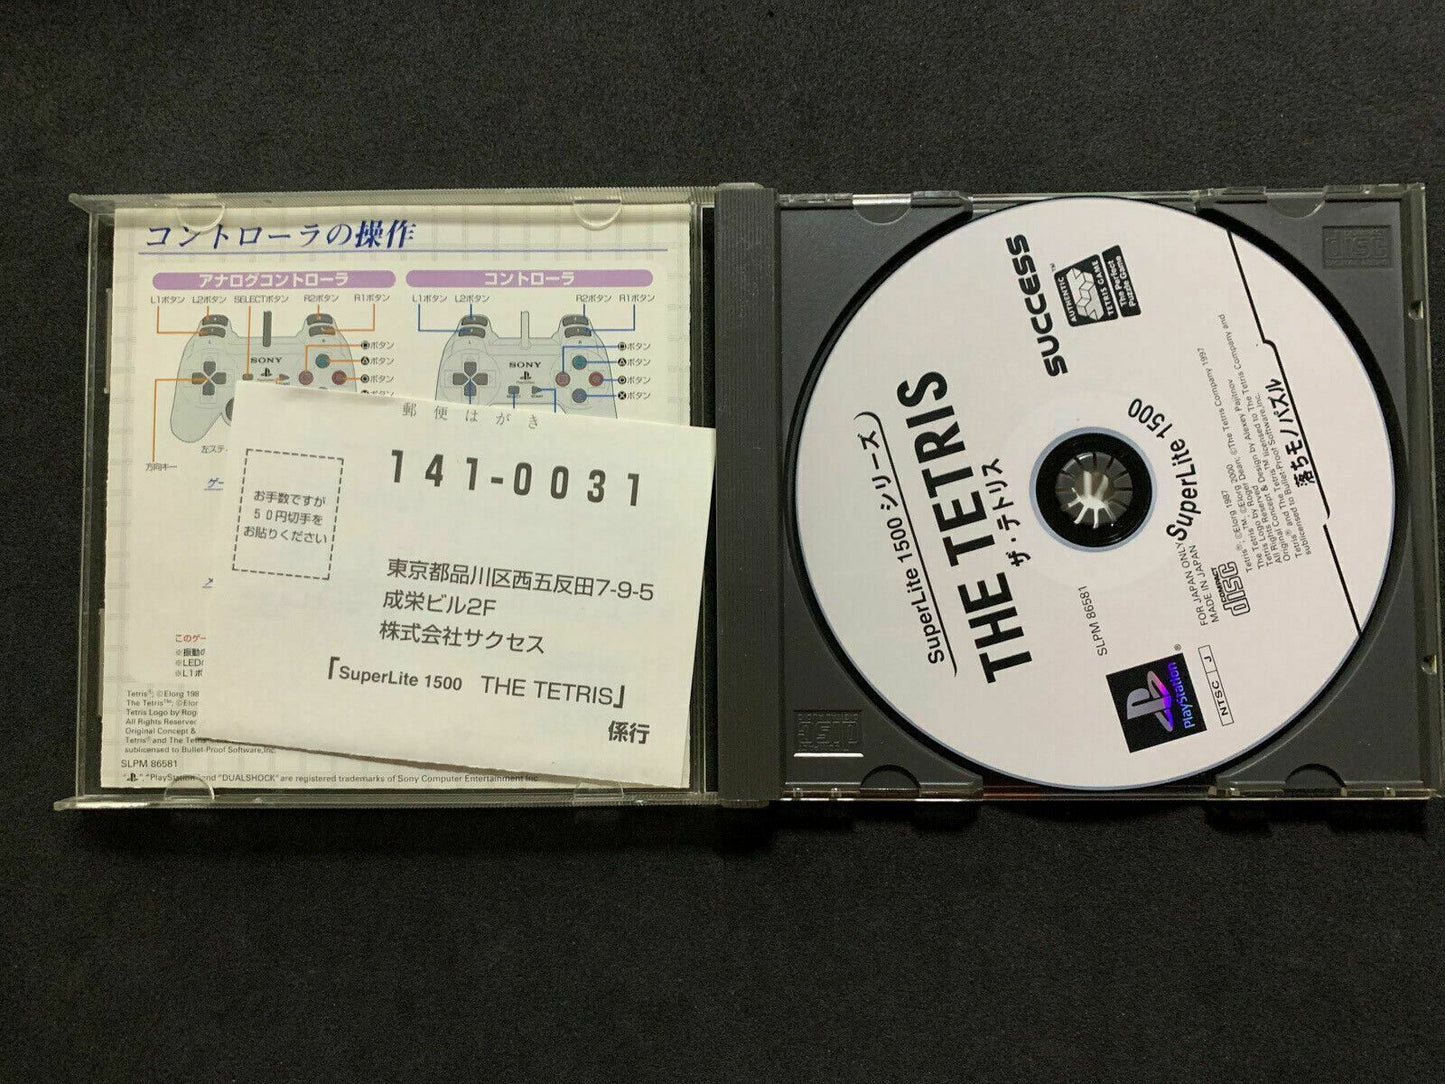 The Tetris - Playstation PS1 NTSC-J Japan Puzzle Game